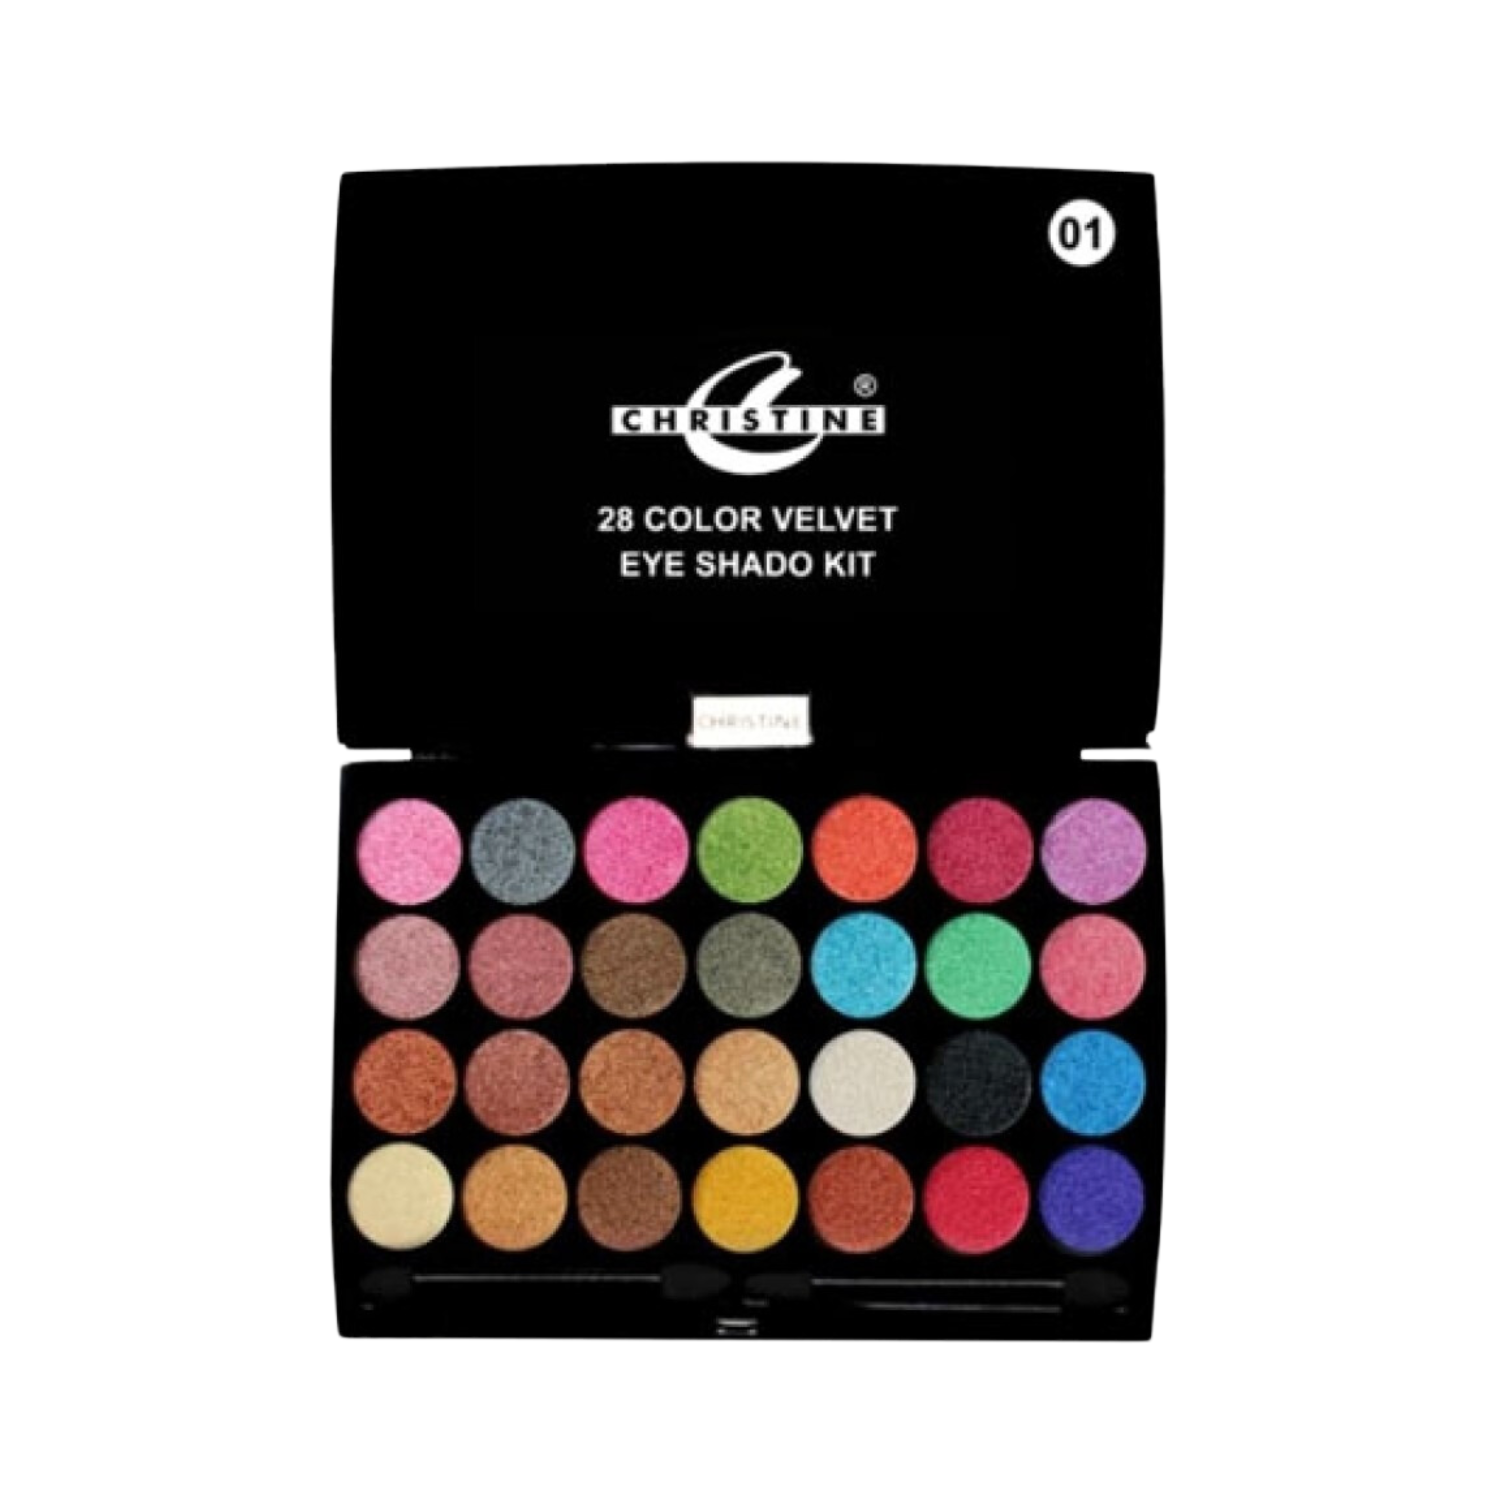 christine-professional-eye-shade-28-colors-kit